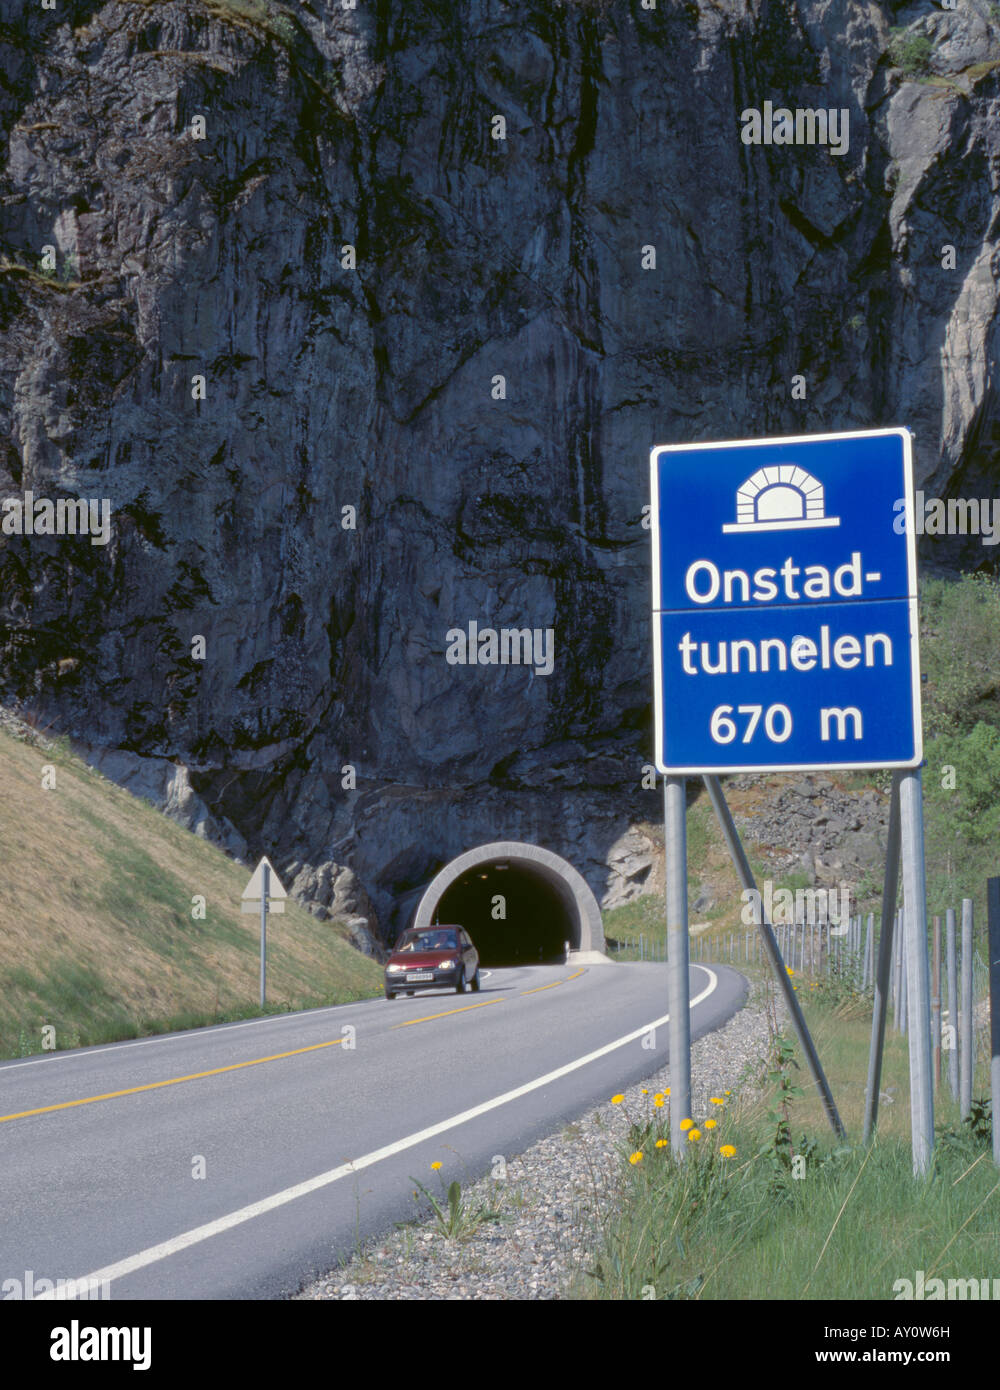 Portal of a road tunnel; Onstadtunnelen (Onstad Tunnel), near Aurland, Sogn og Fjordane, Norway. Stock Photo